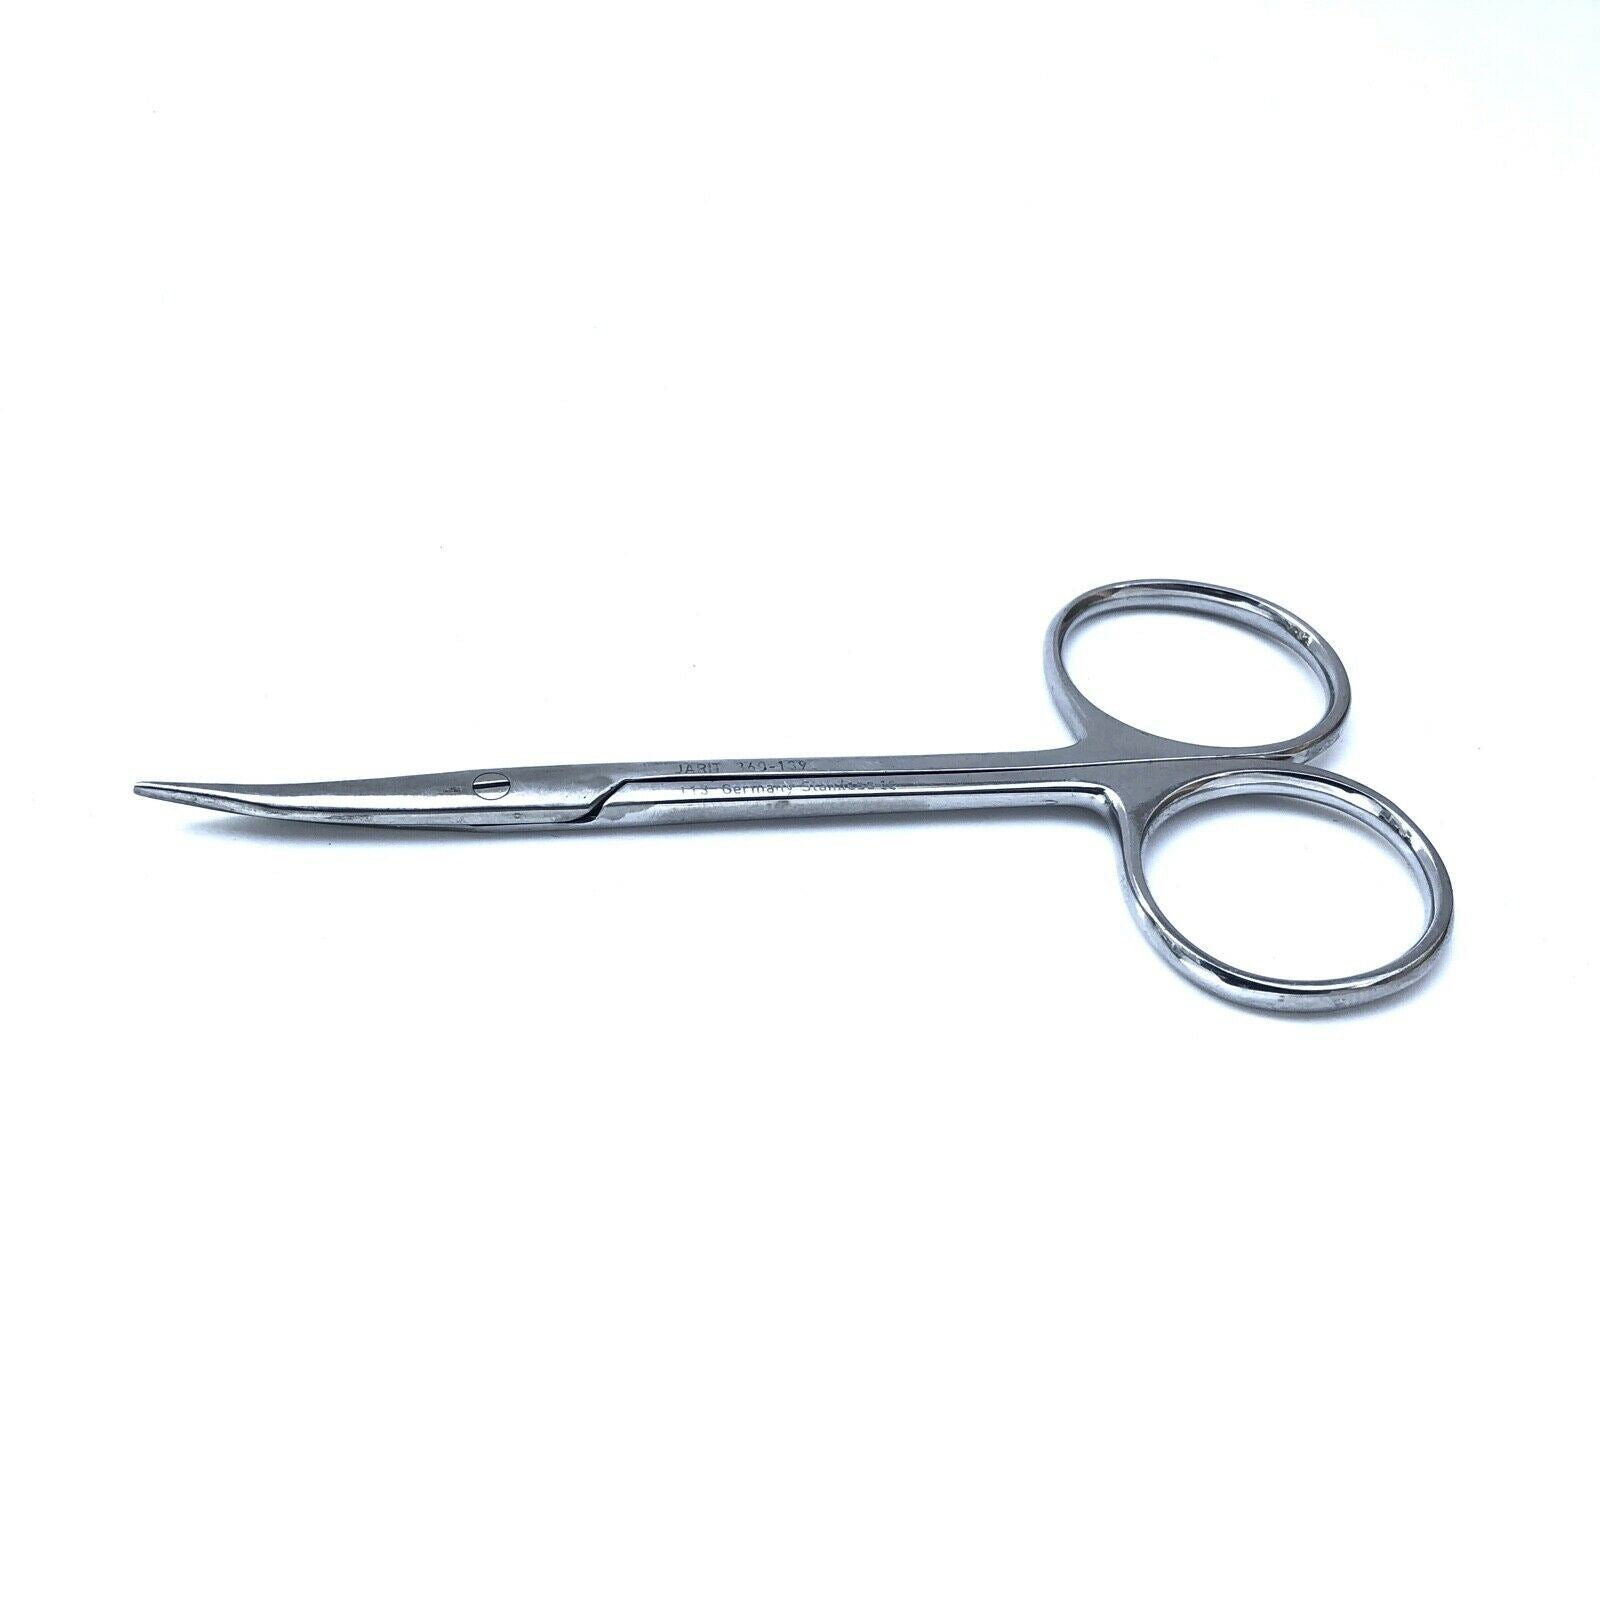 Jarit 360-139 Stevens Tenotomy Curved Scissors, 4-1/2" (DMT362) DIAGNOSTIC ULTRASOUND MACHINES FOR SALE